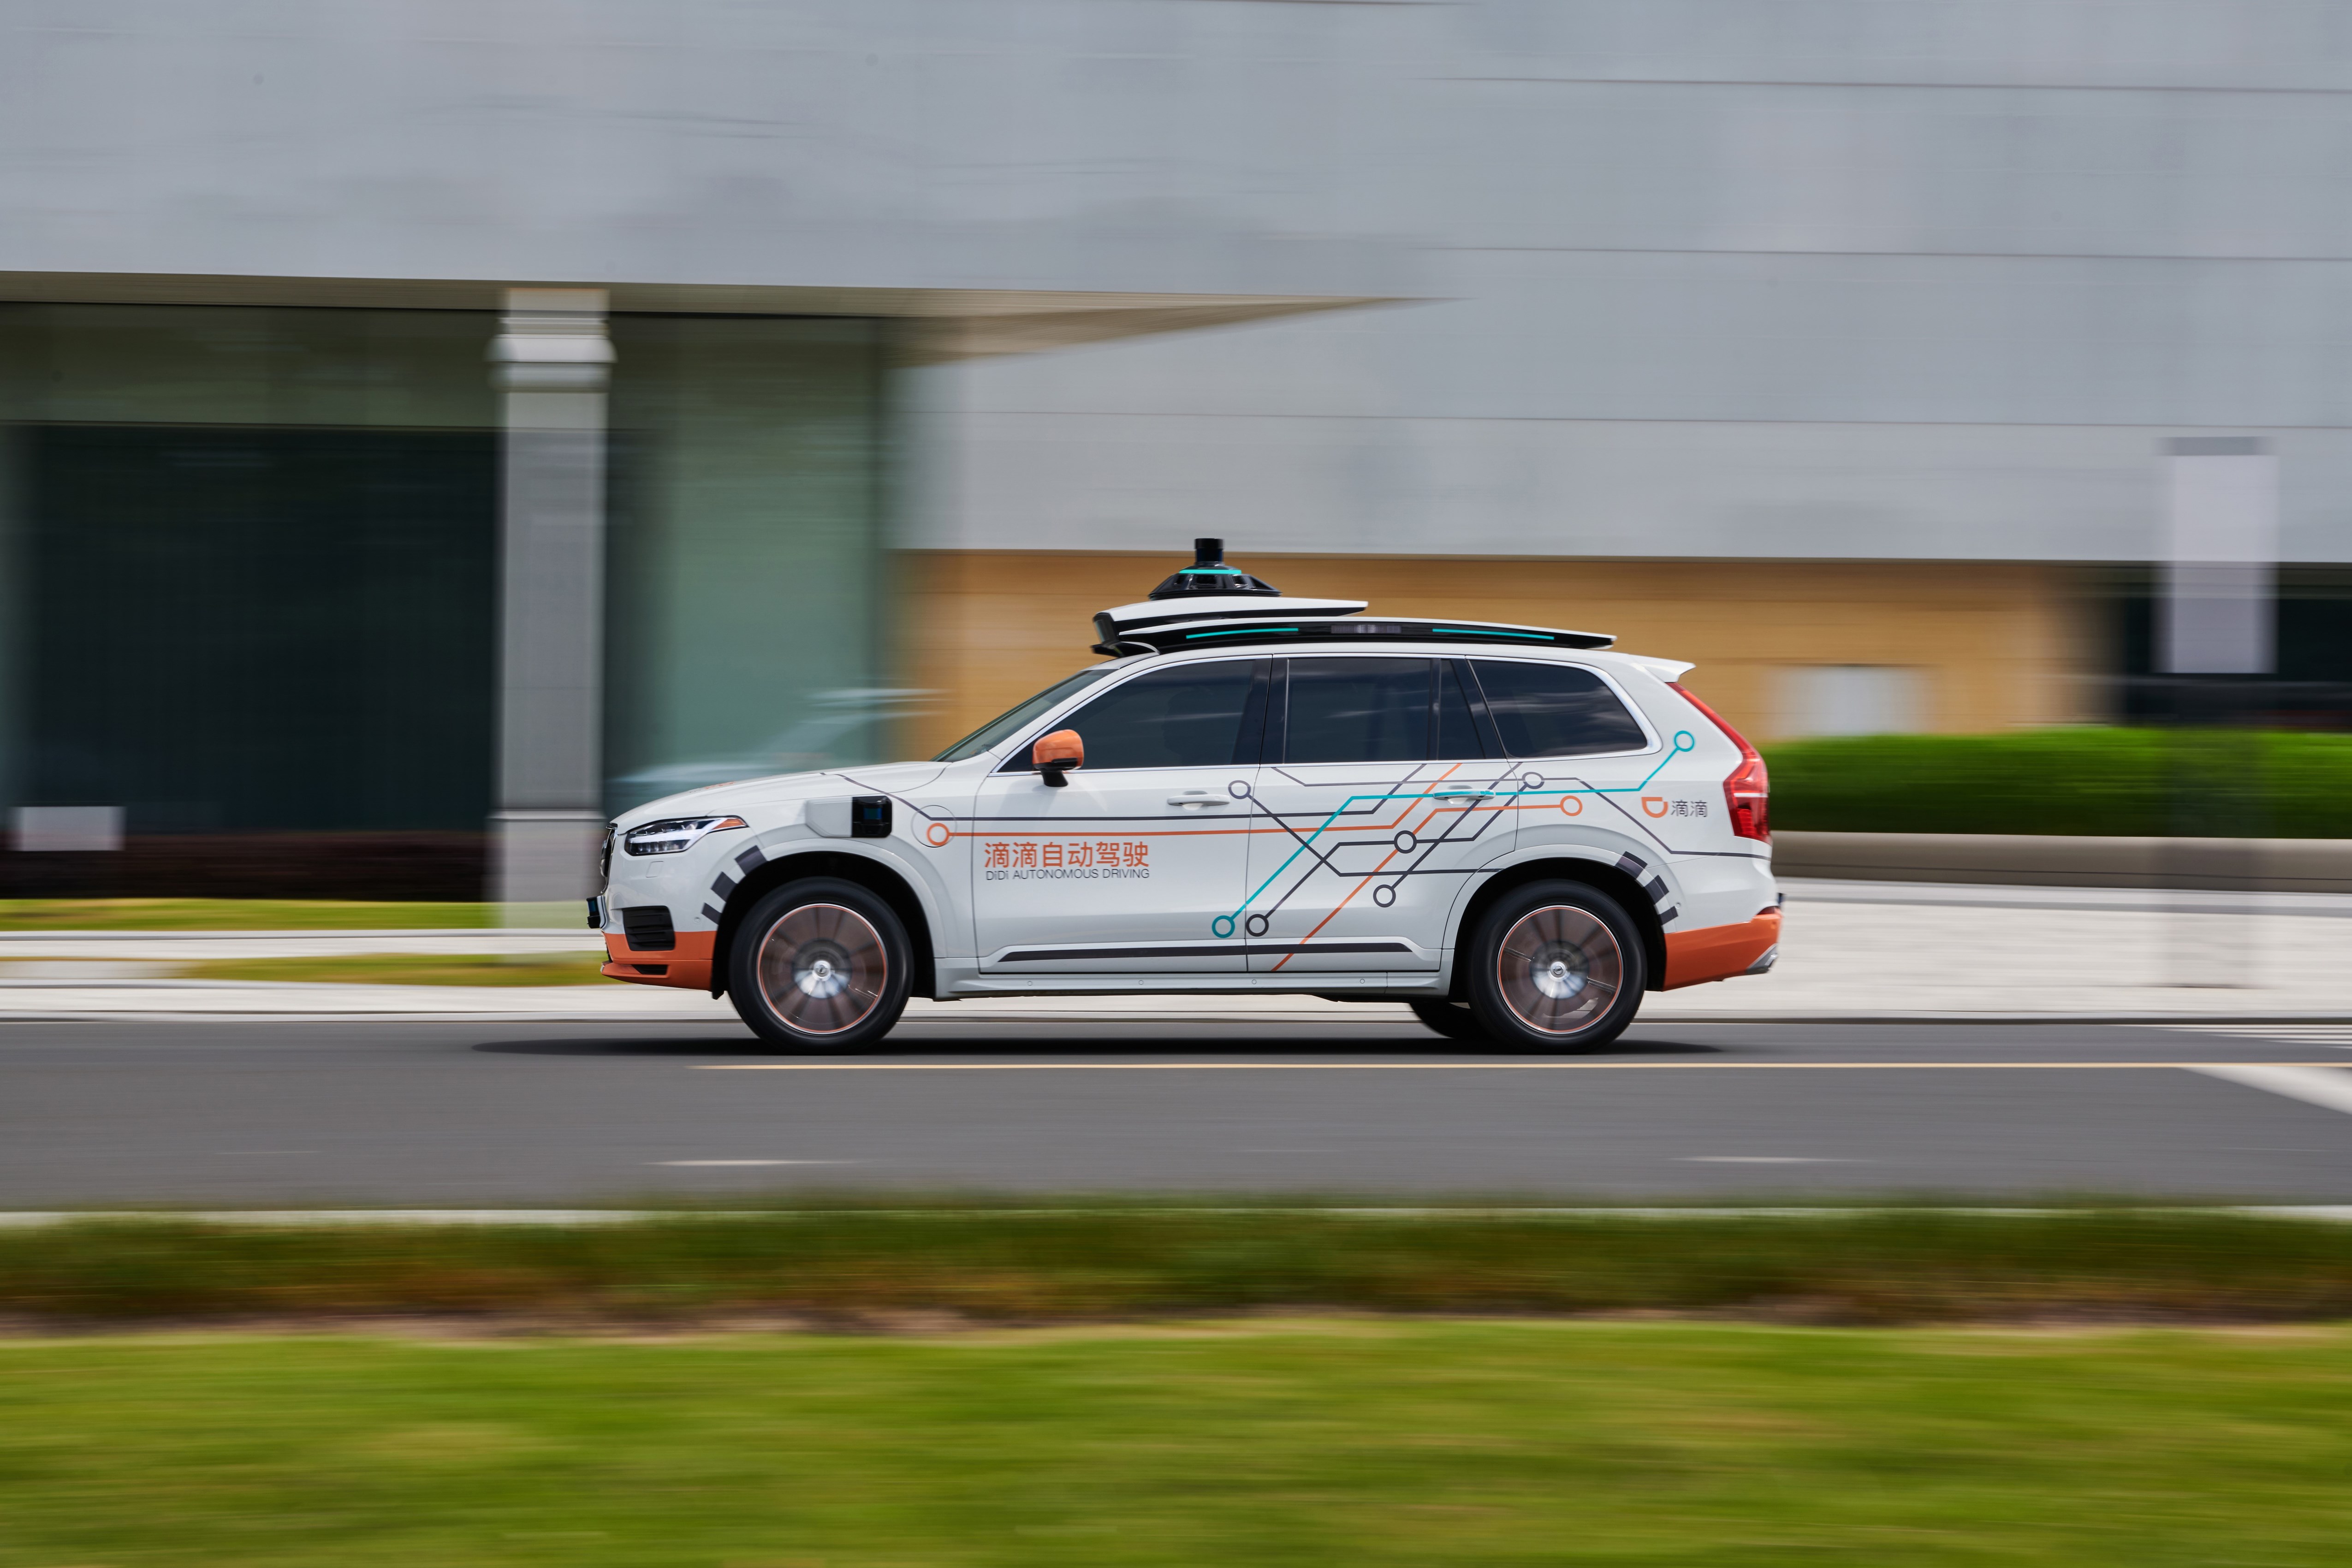 280685_Volvo DiDi Autonomous Driving test vehicle fleet Paul Tan's